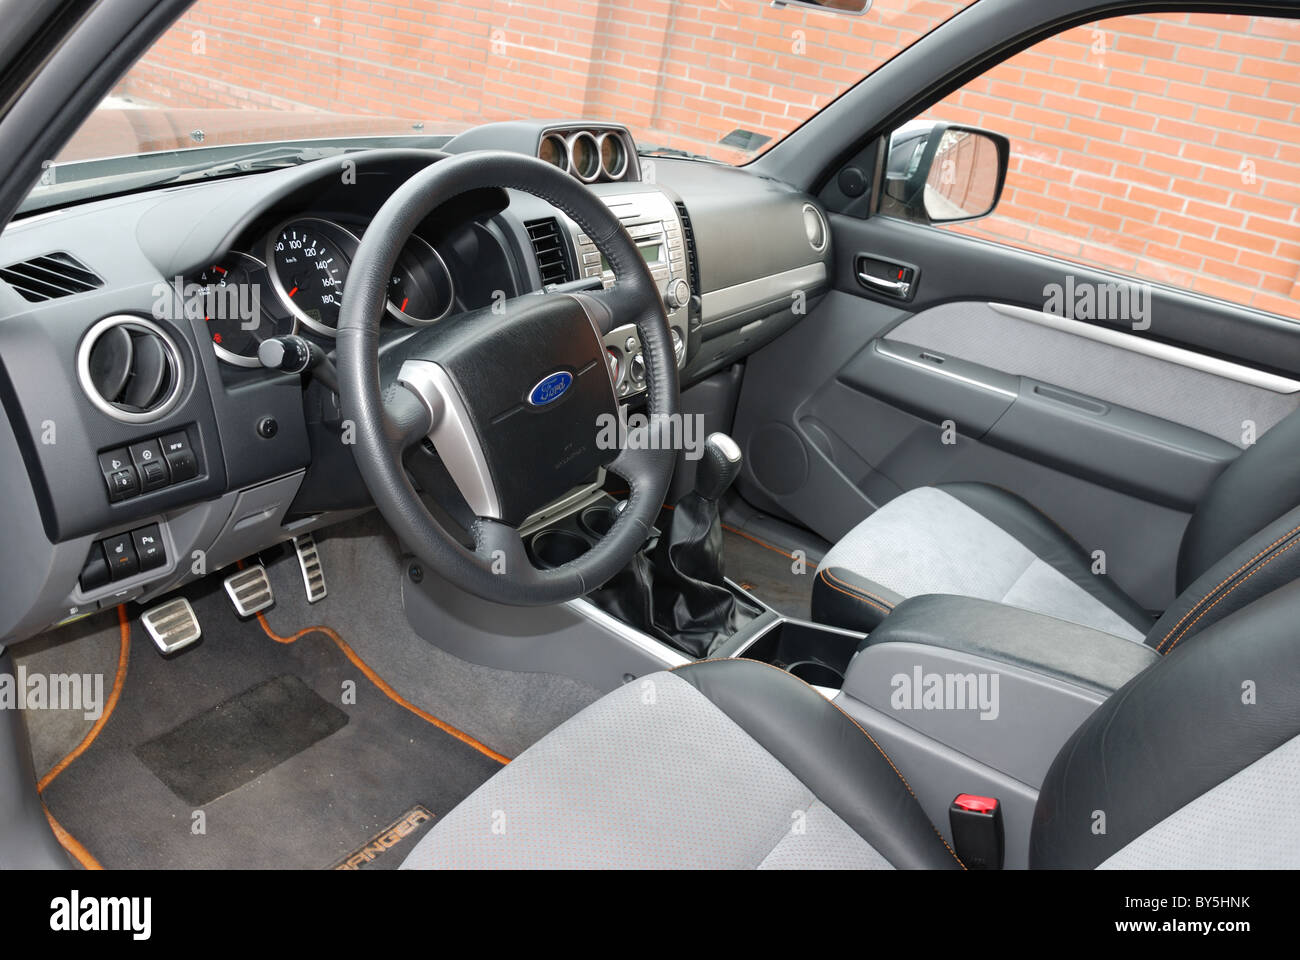 Ford Ranger 3.0 TDCi Wildtrak 4x4 - MY 2010 - black metallic - Double Cab -  German pick-up - interior Stock Photo - Alamy